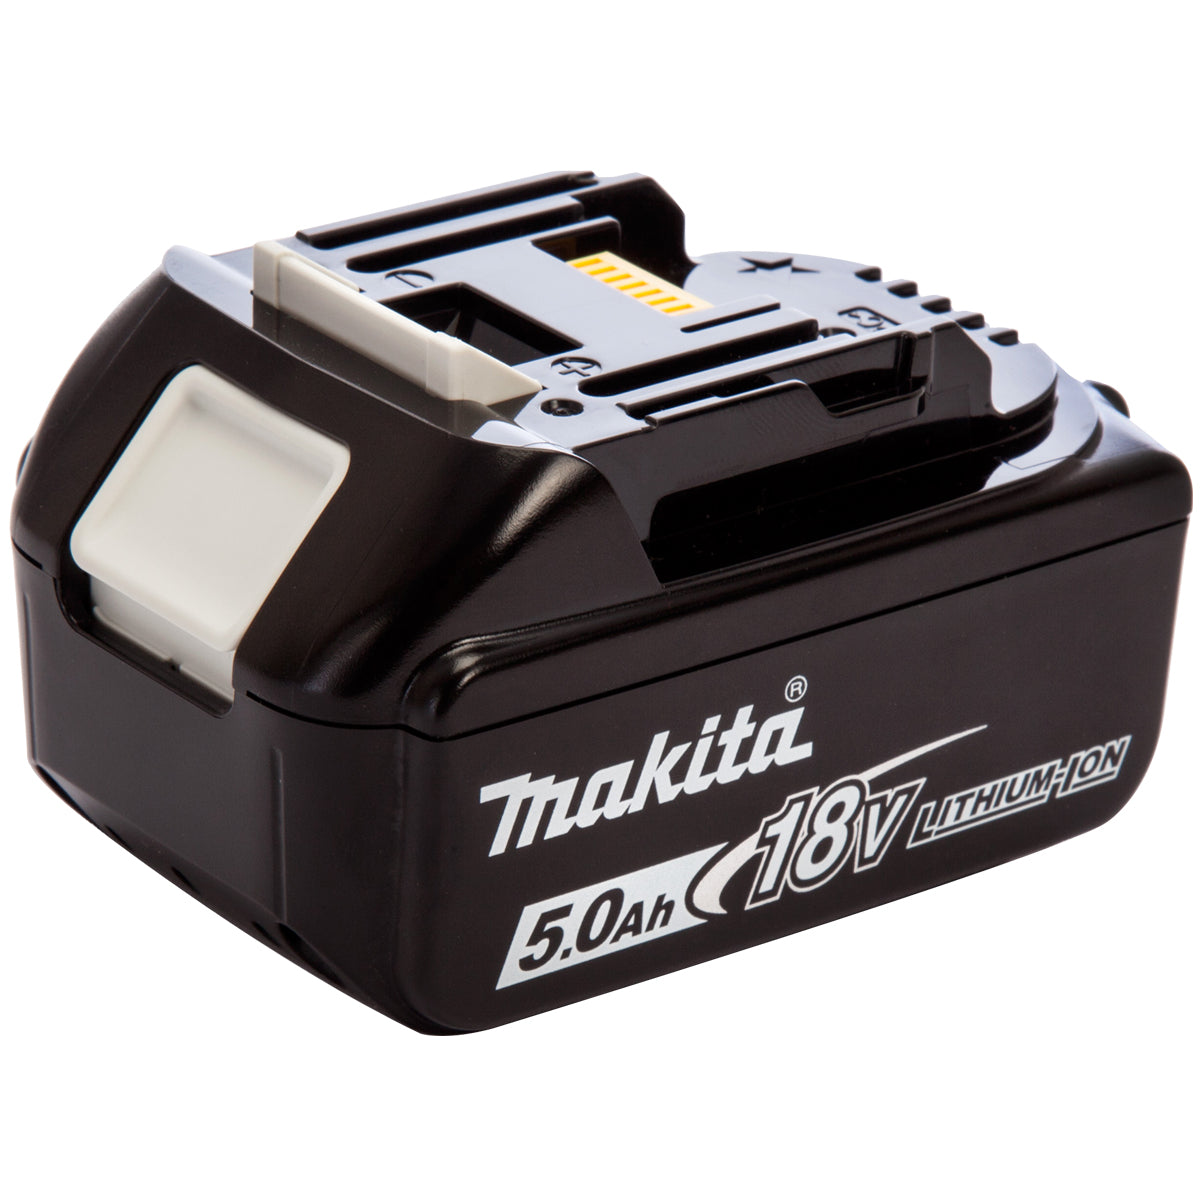 Makita 6 Piece Kit 18V Li-ion with 3 x 5.0Ah Batteries & Charger T4TKIT-98